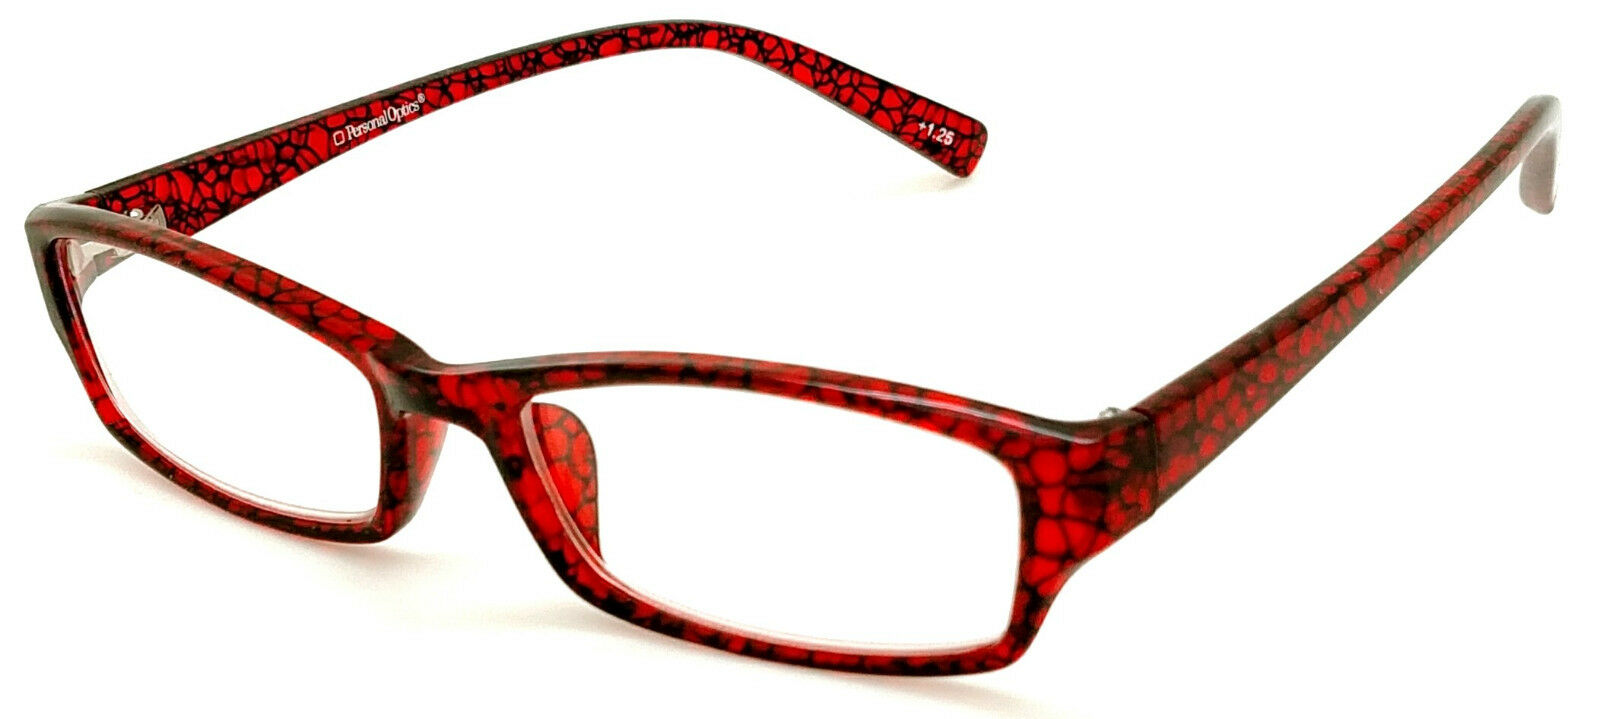 Personal Optics Half-eye Red lace patterrn